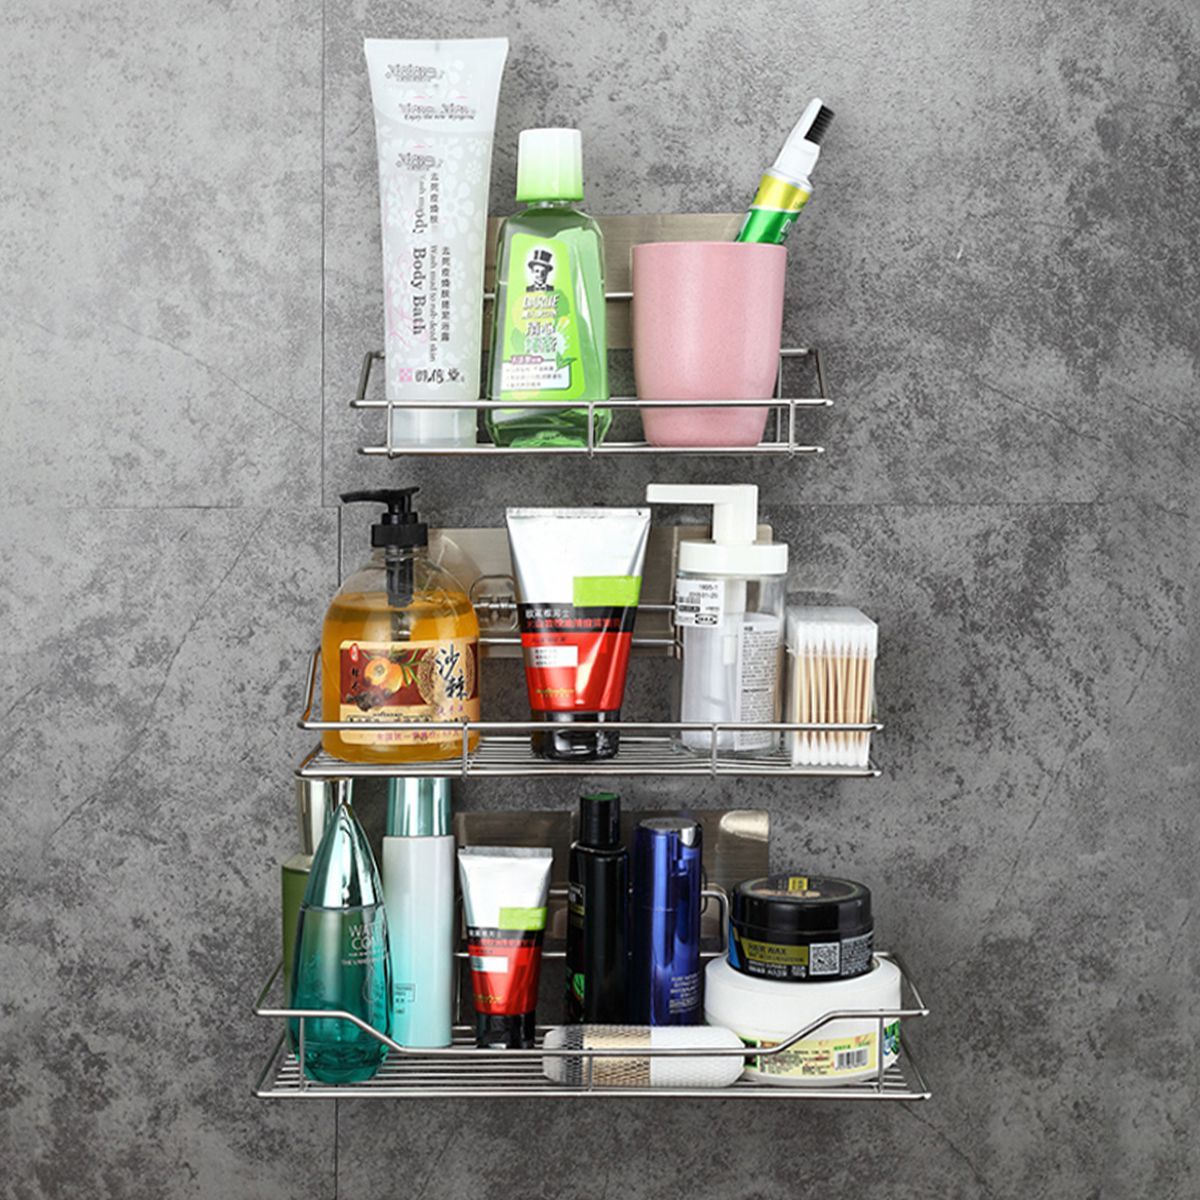 Stainless-Steel-Bathroom-Wall-Shelf-Suction-Cup-Holder-Corner-Storage-Rack-Organizer-1570232